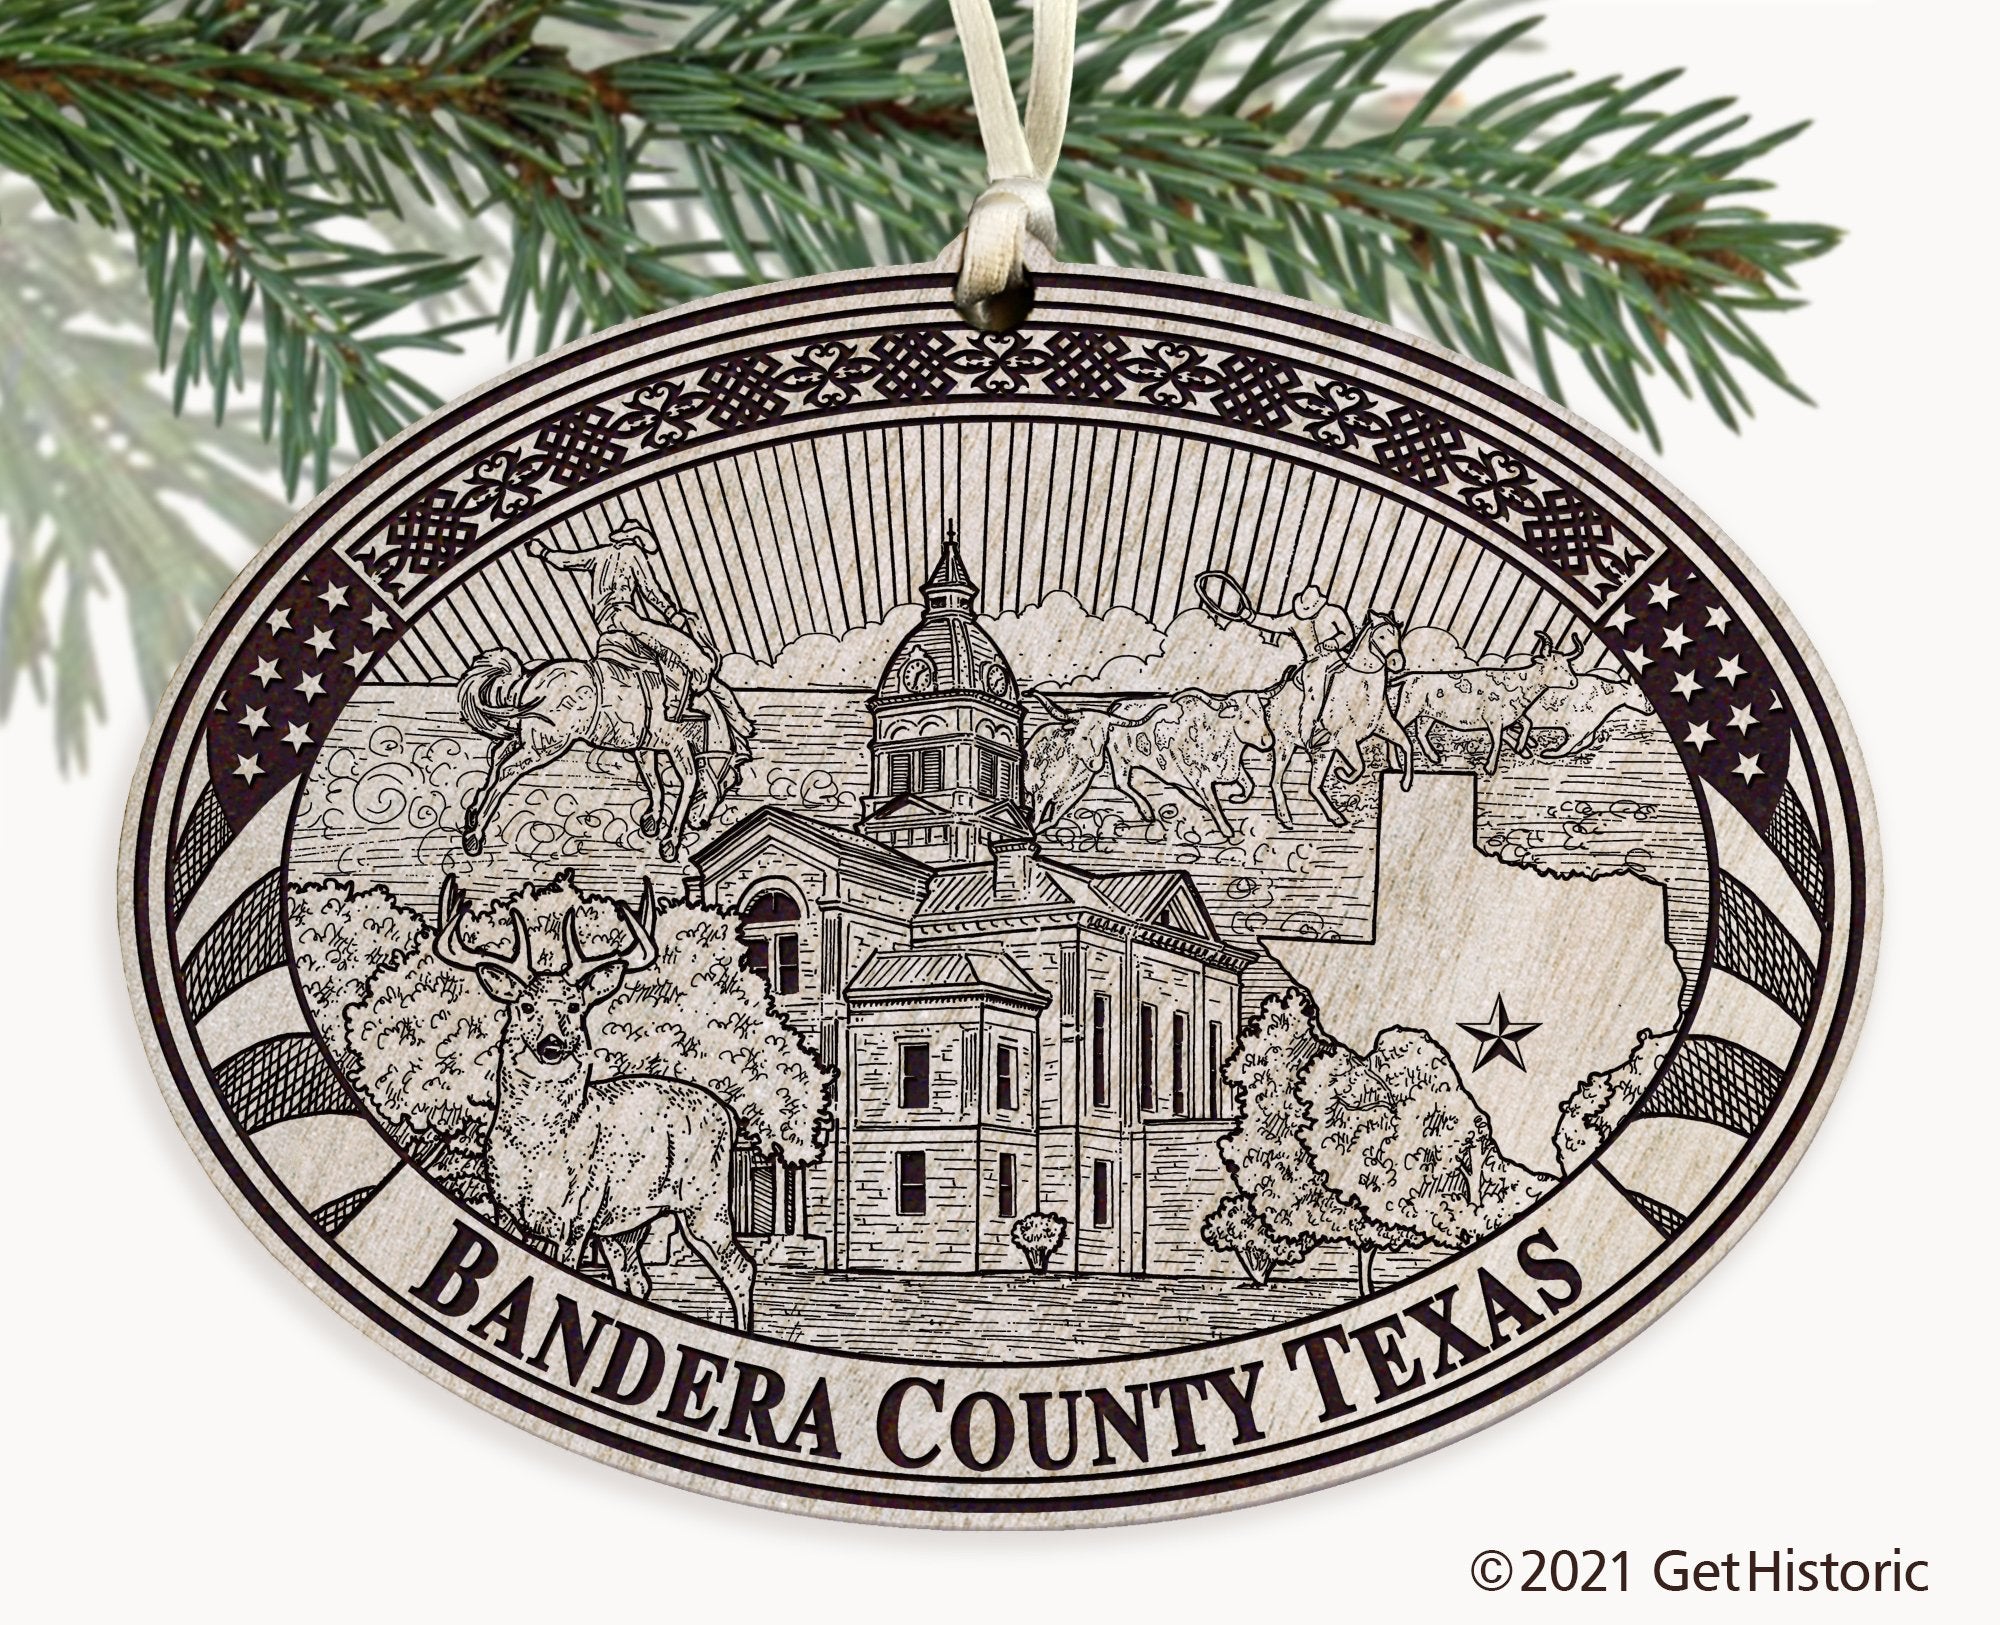 Bandera County Texas Engraved Ornament